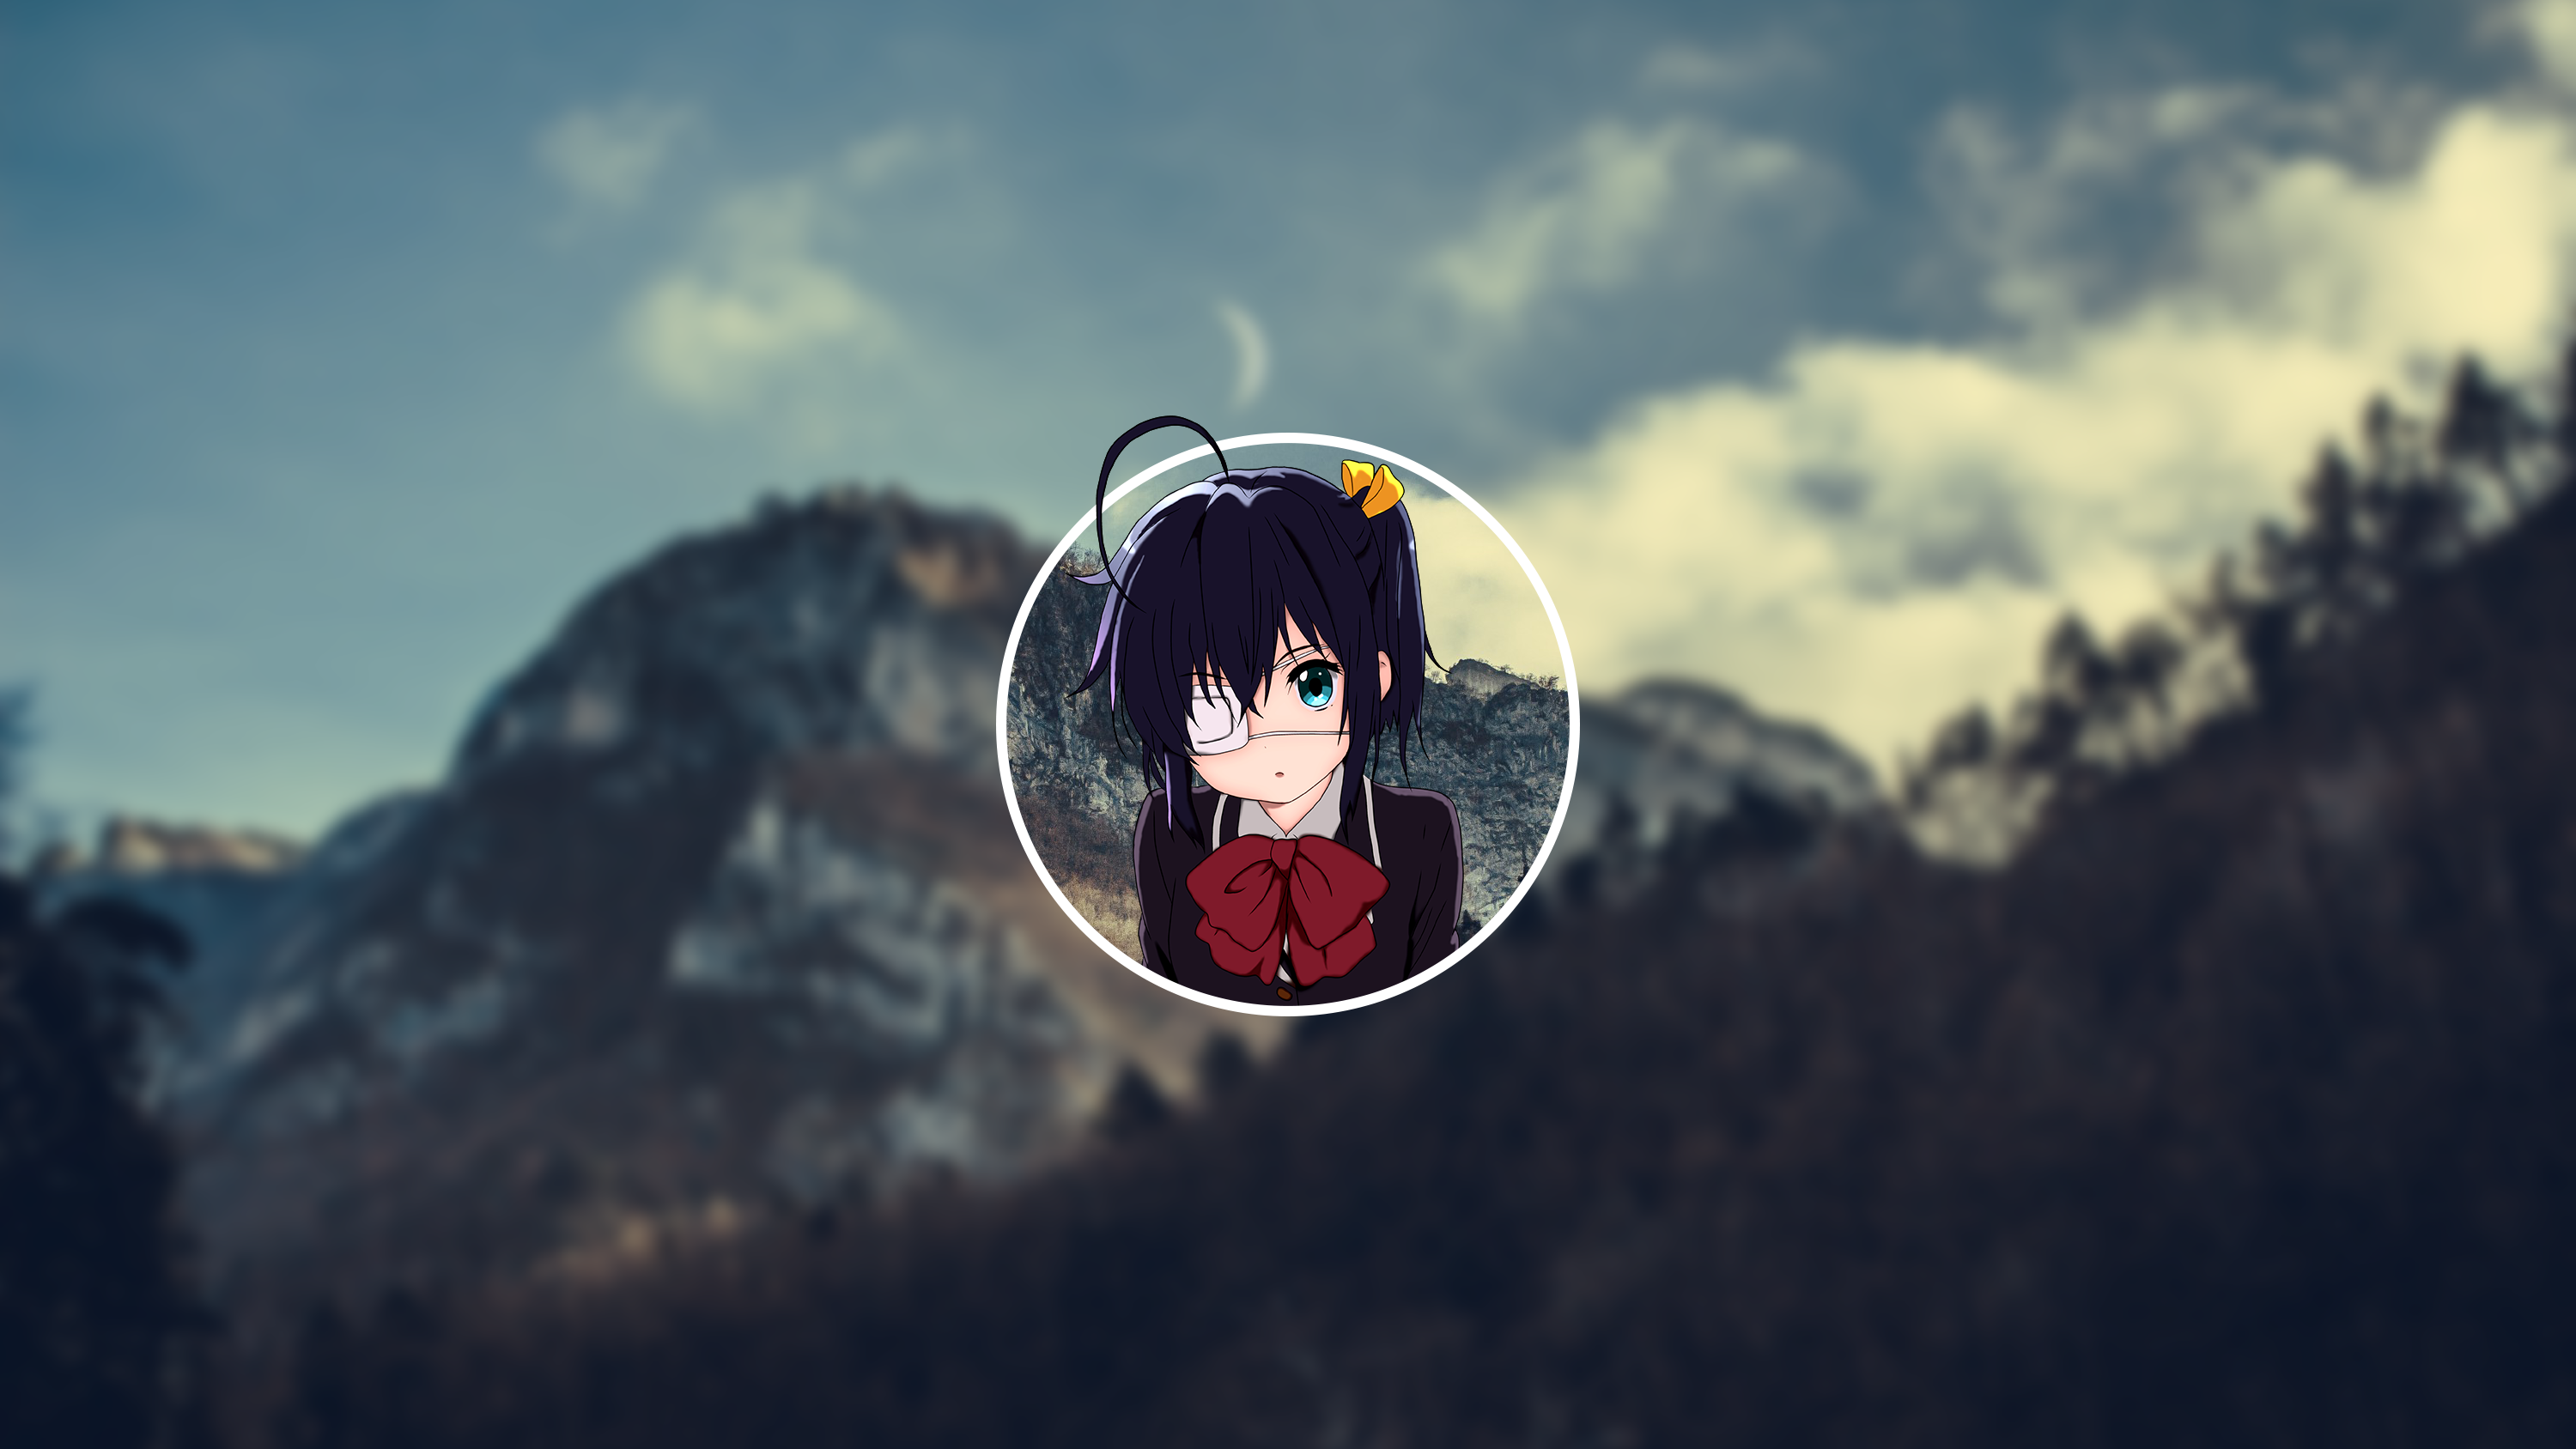 Anime 3000x1688 Takanashi Rikka mountains blurred